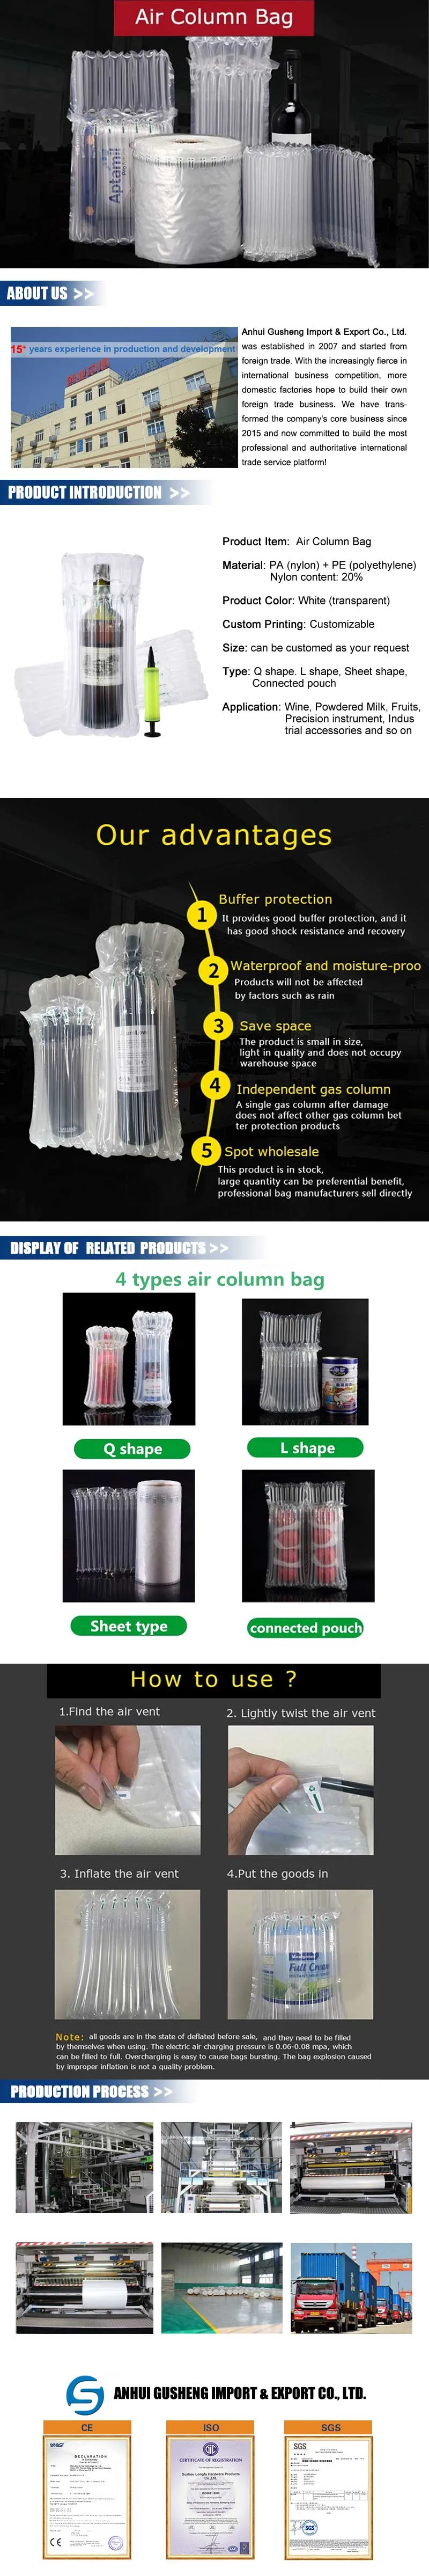 Quality Stylish Toner Cartridge Air Column Bags